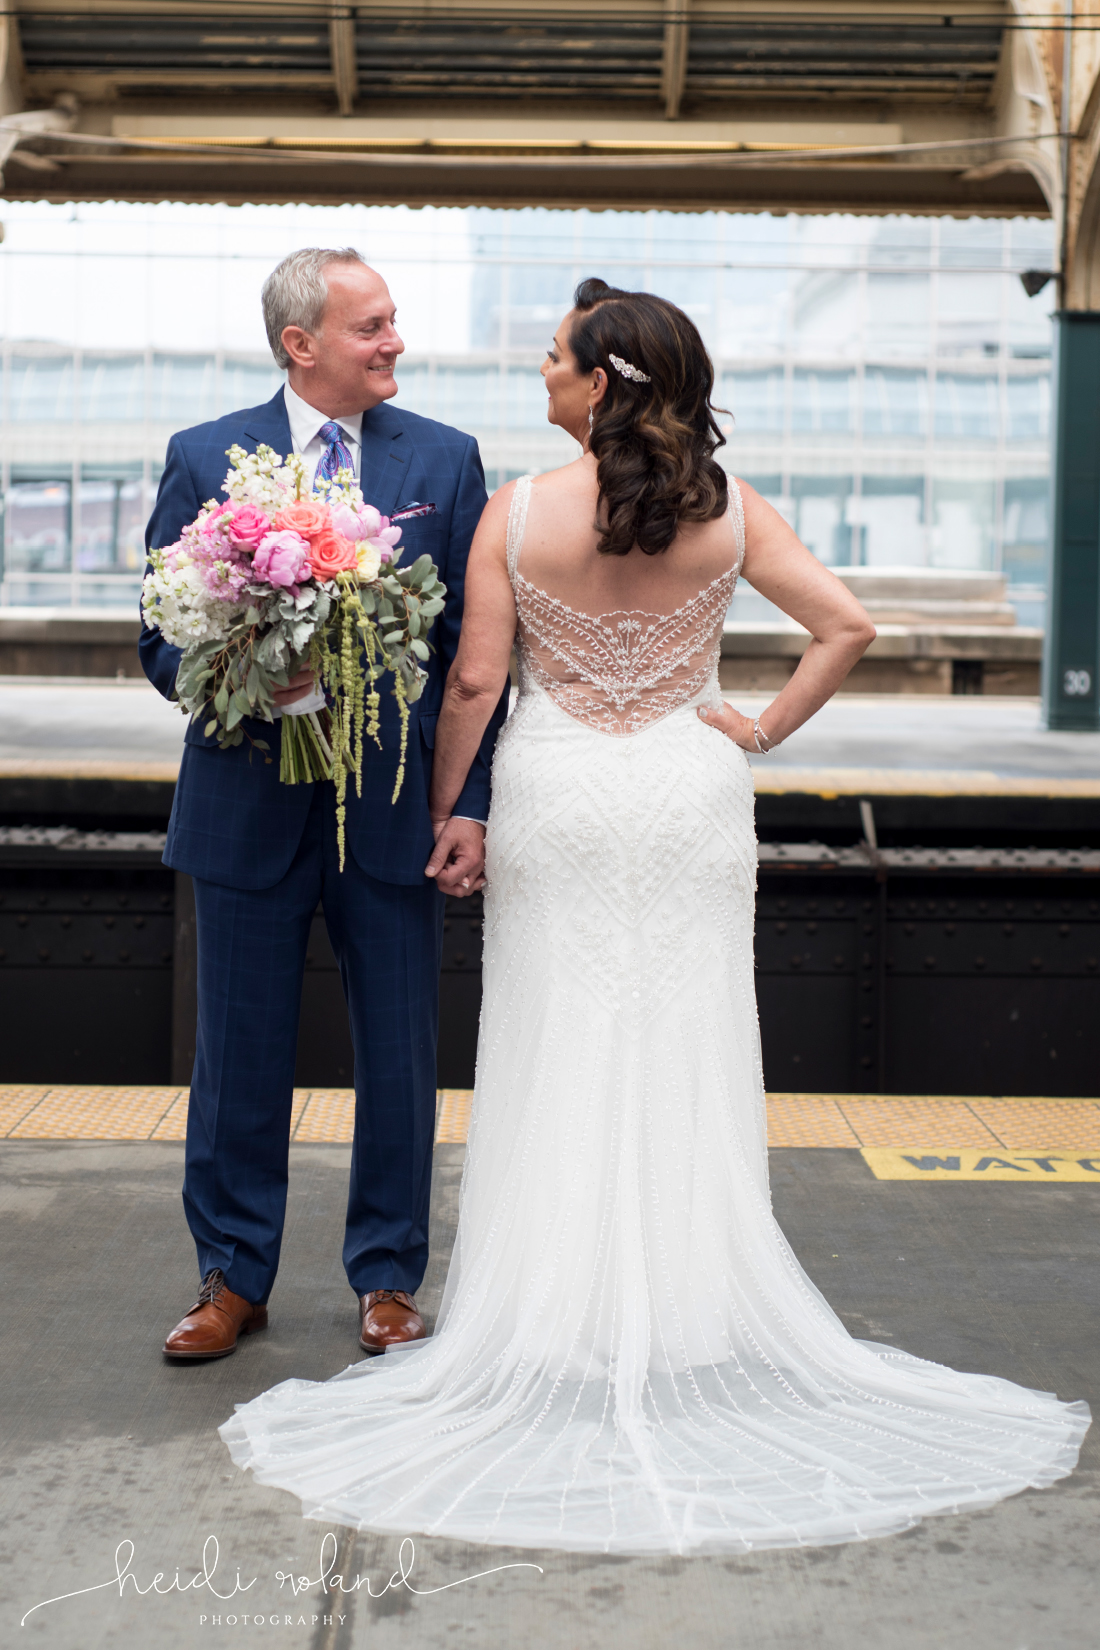 30th street station train platform couples wedding photos, big bold bouquet